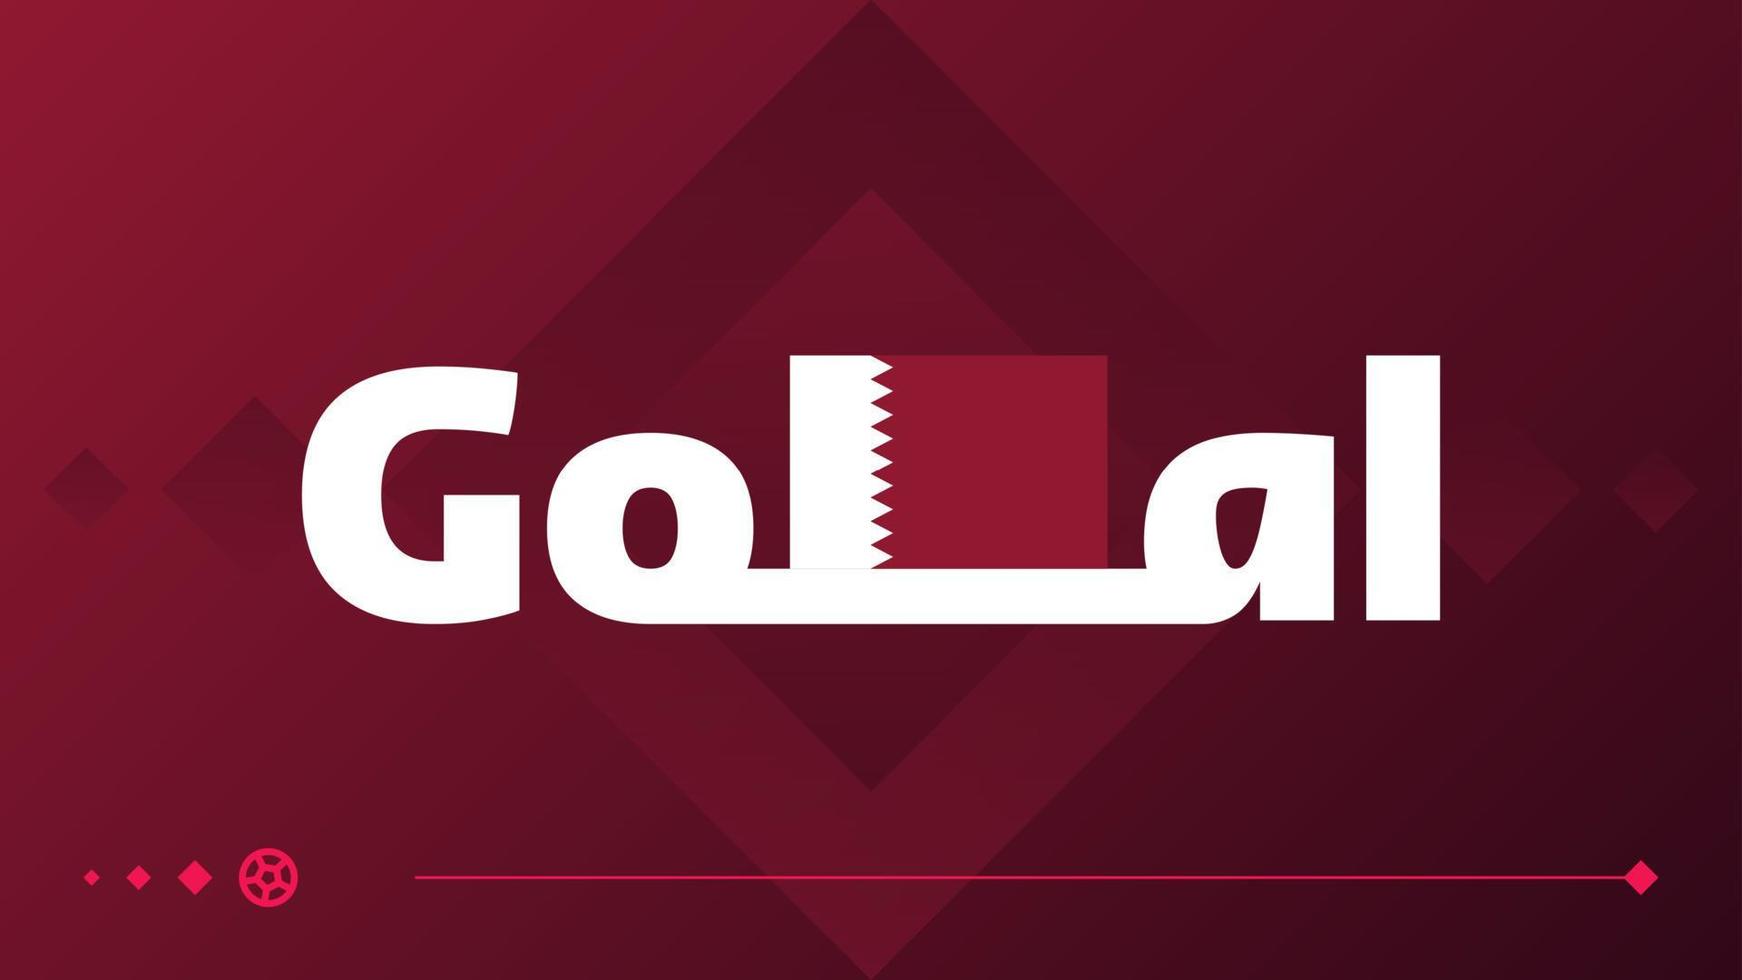 Qatar 2022 doel slogan met vlag op voetbaltoernooi achtergrond. vector illustratie voetbal patroon voor banner, kaart, website. bordeaux kleur nationale vlag qatar